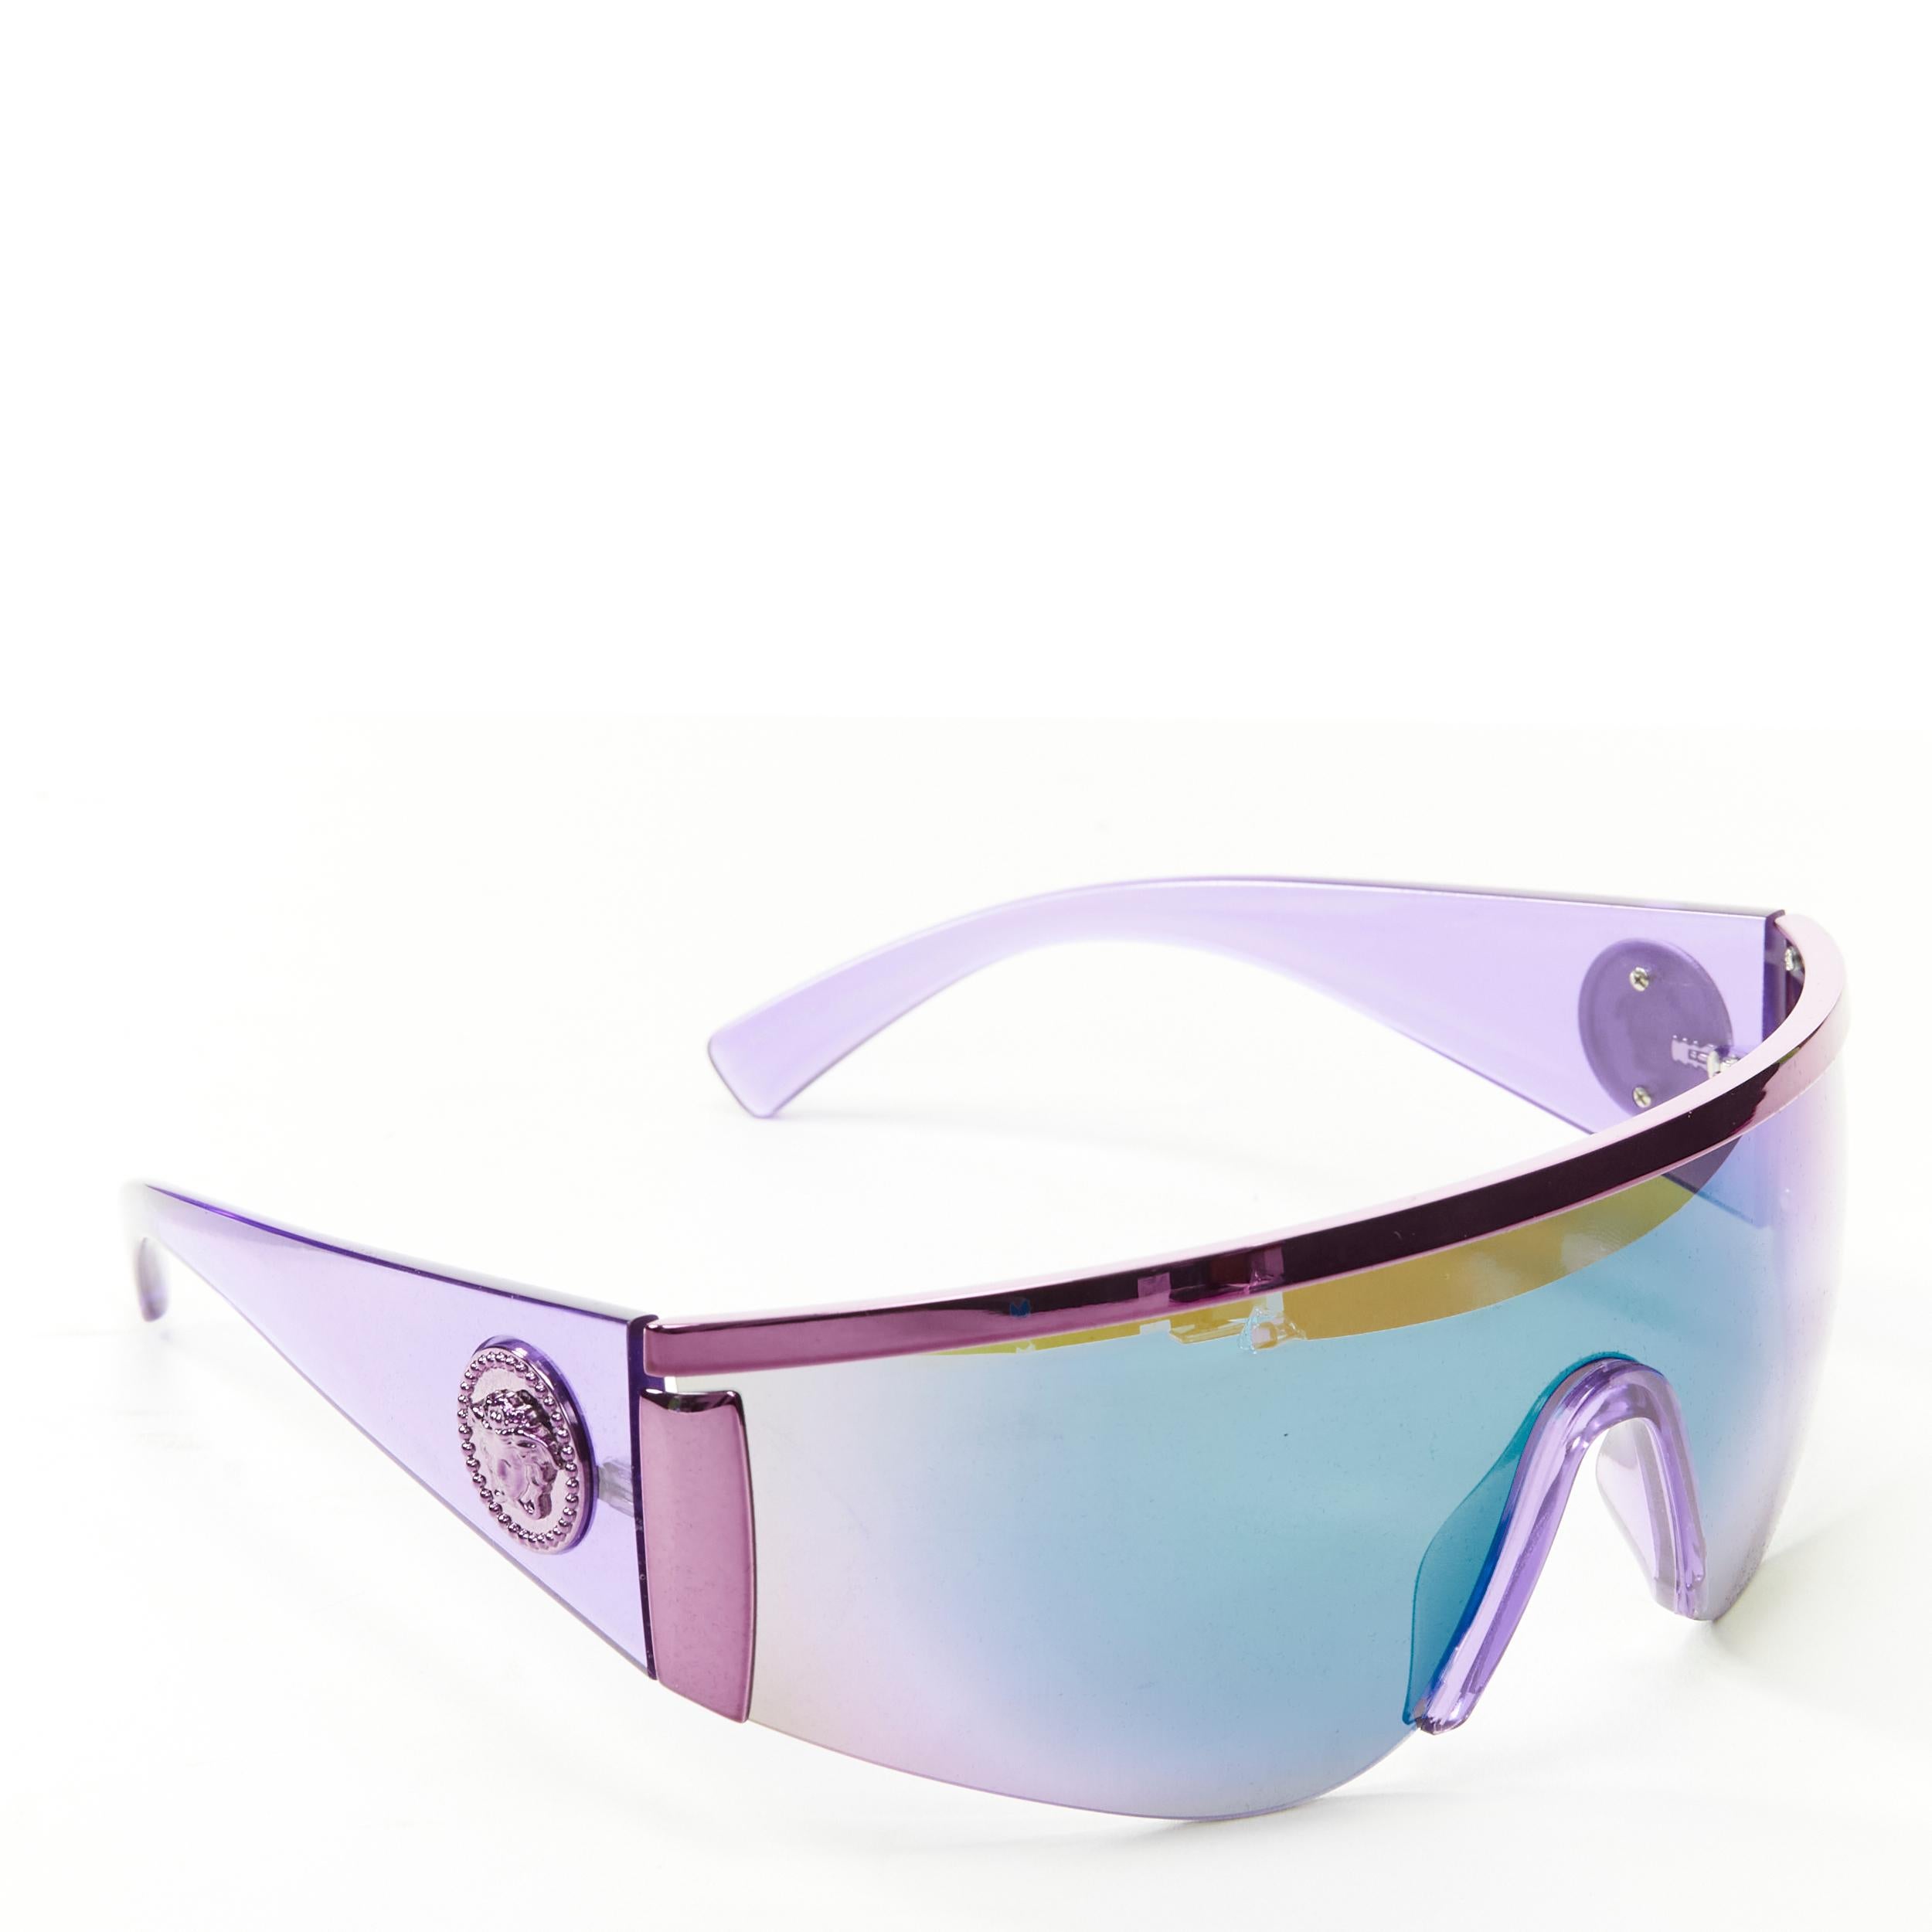 Blue new VERSACE VE2197 2018 Tribute Medusa purple blue reflective sunglasses